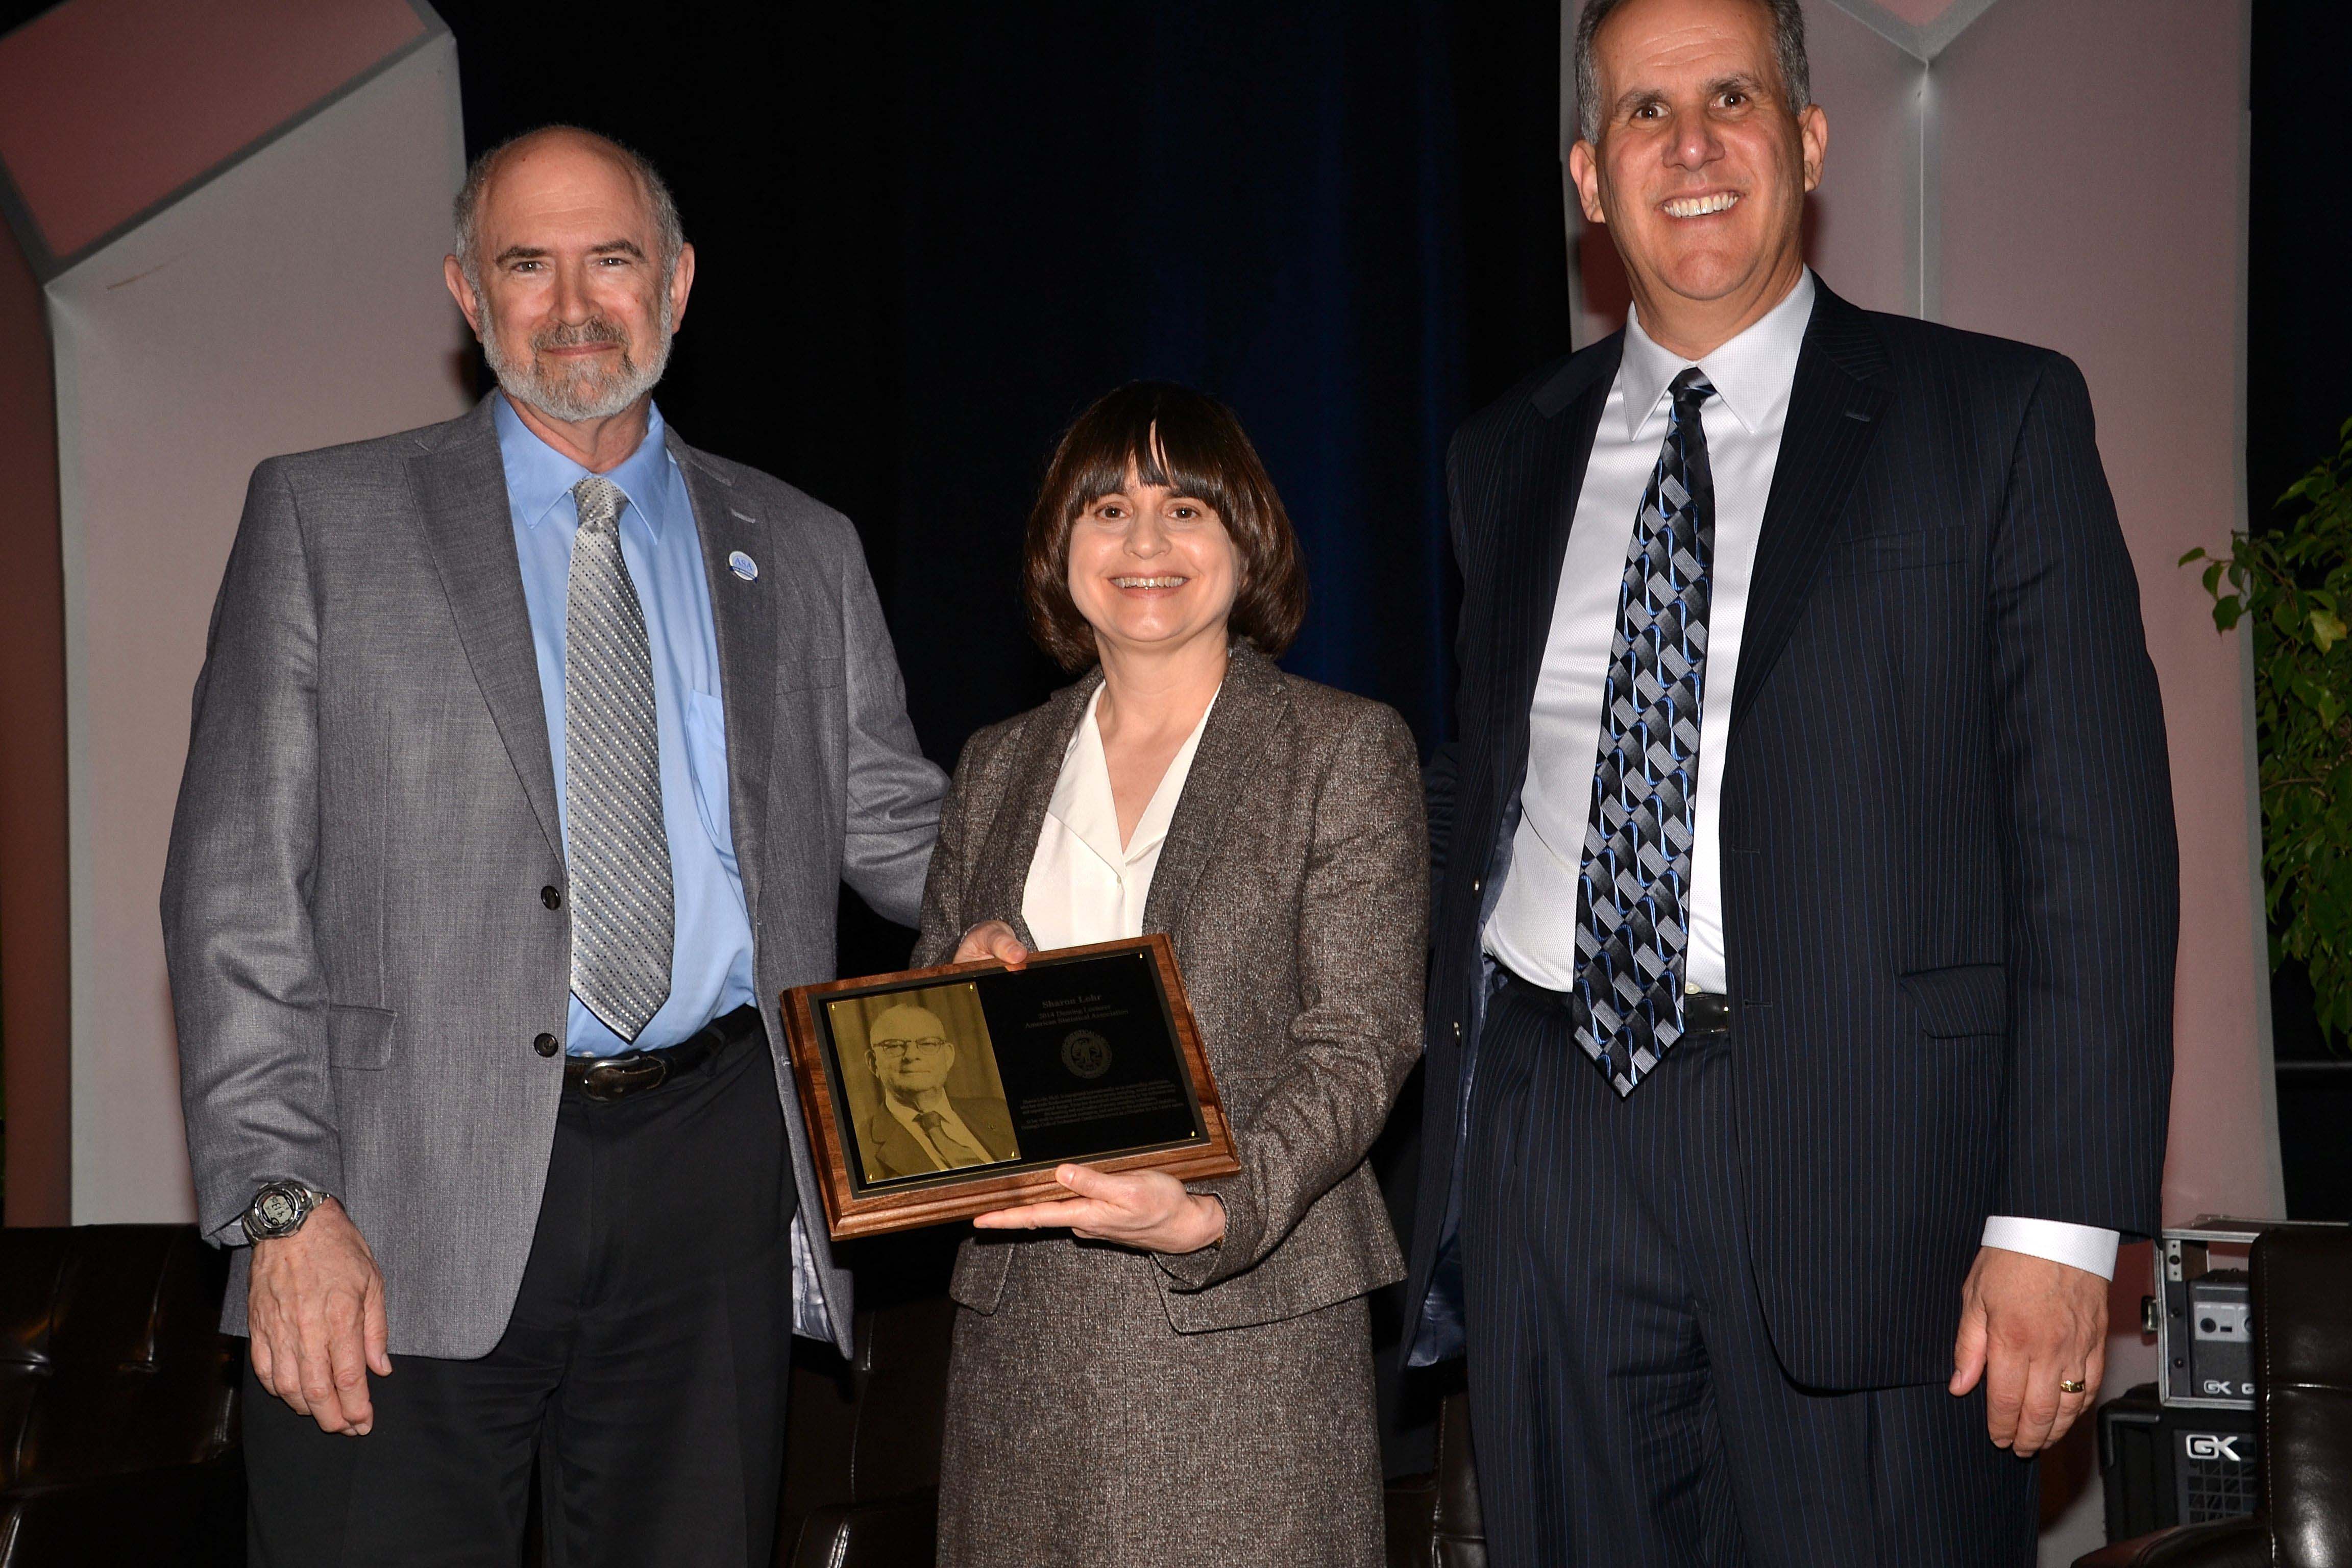 From left: ASA President-elect David Morganstein, 2014 Deming Lecturer Sharon Lohr, and ASA President Nathaniel Schenker